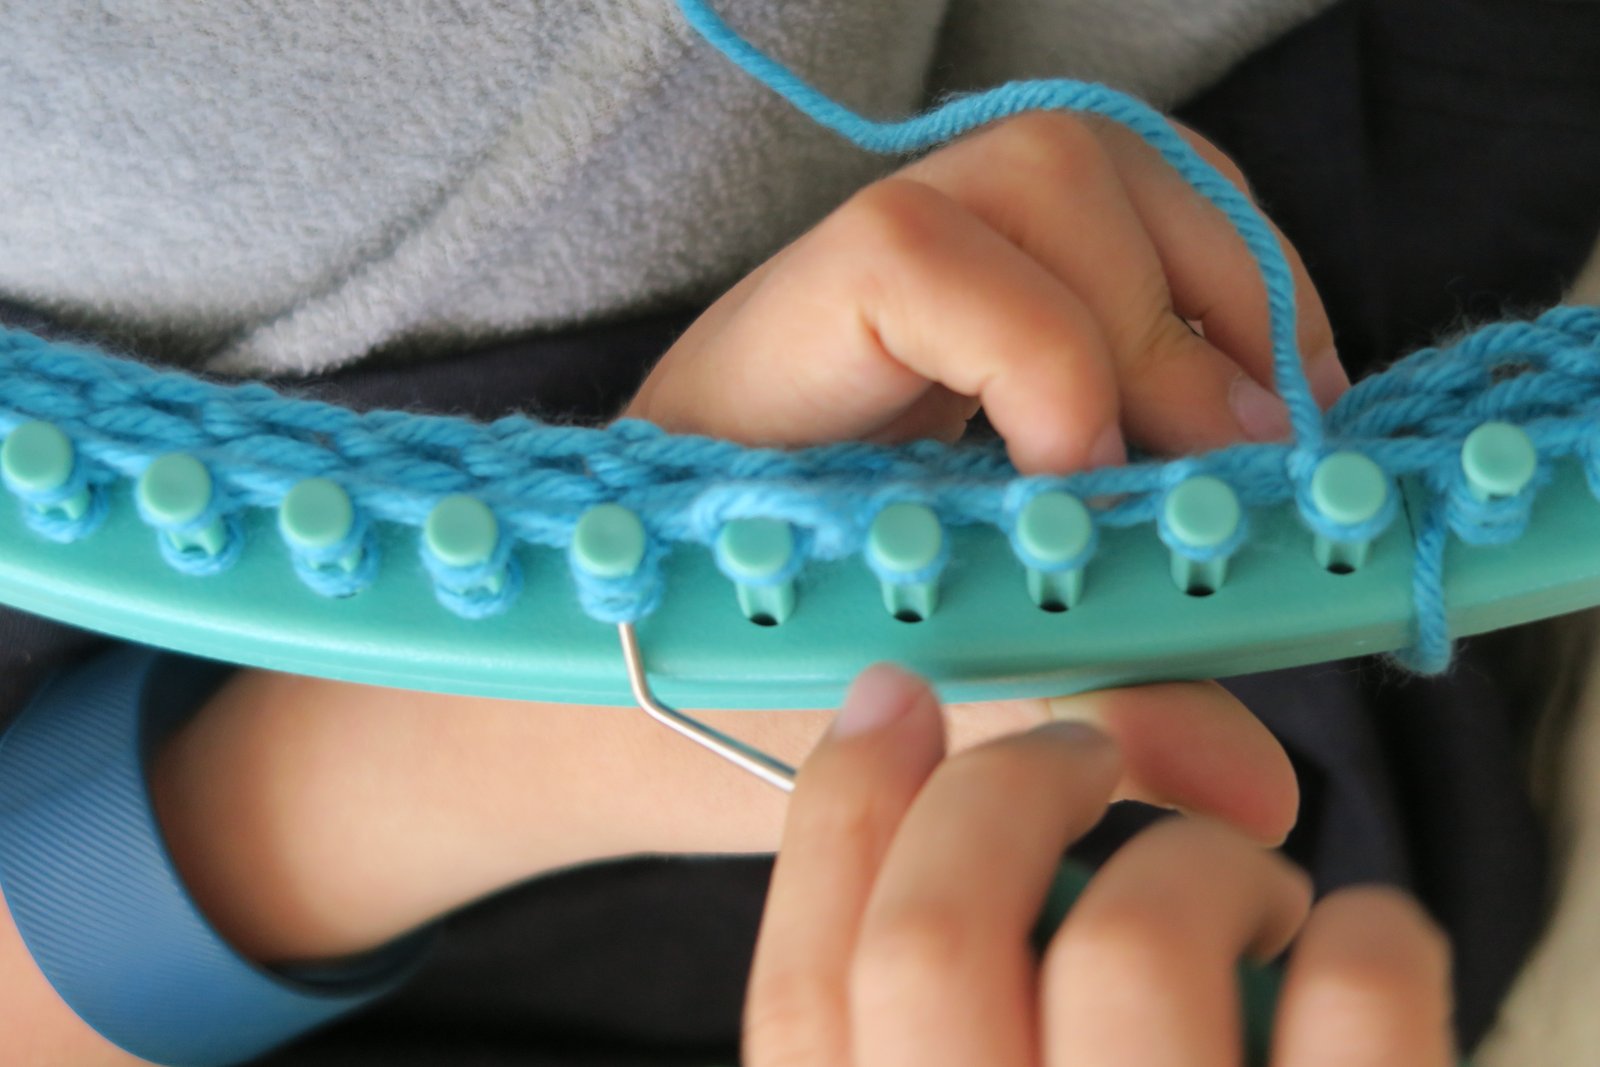 Cindy deRosier: My Creative Life: Oval Knitting Loom Project #1: Beanie!